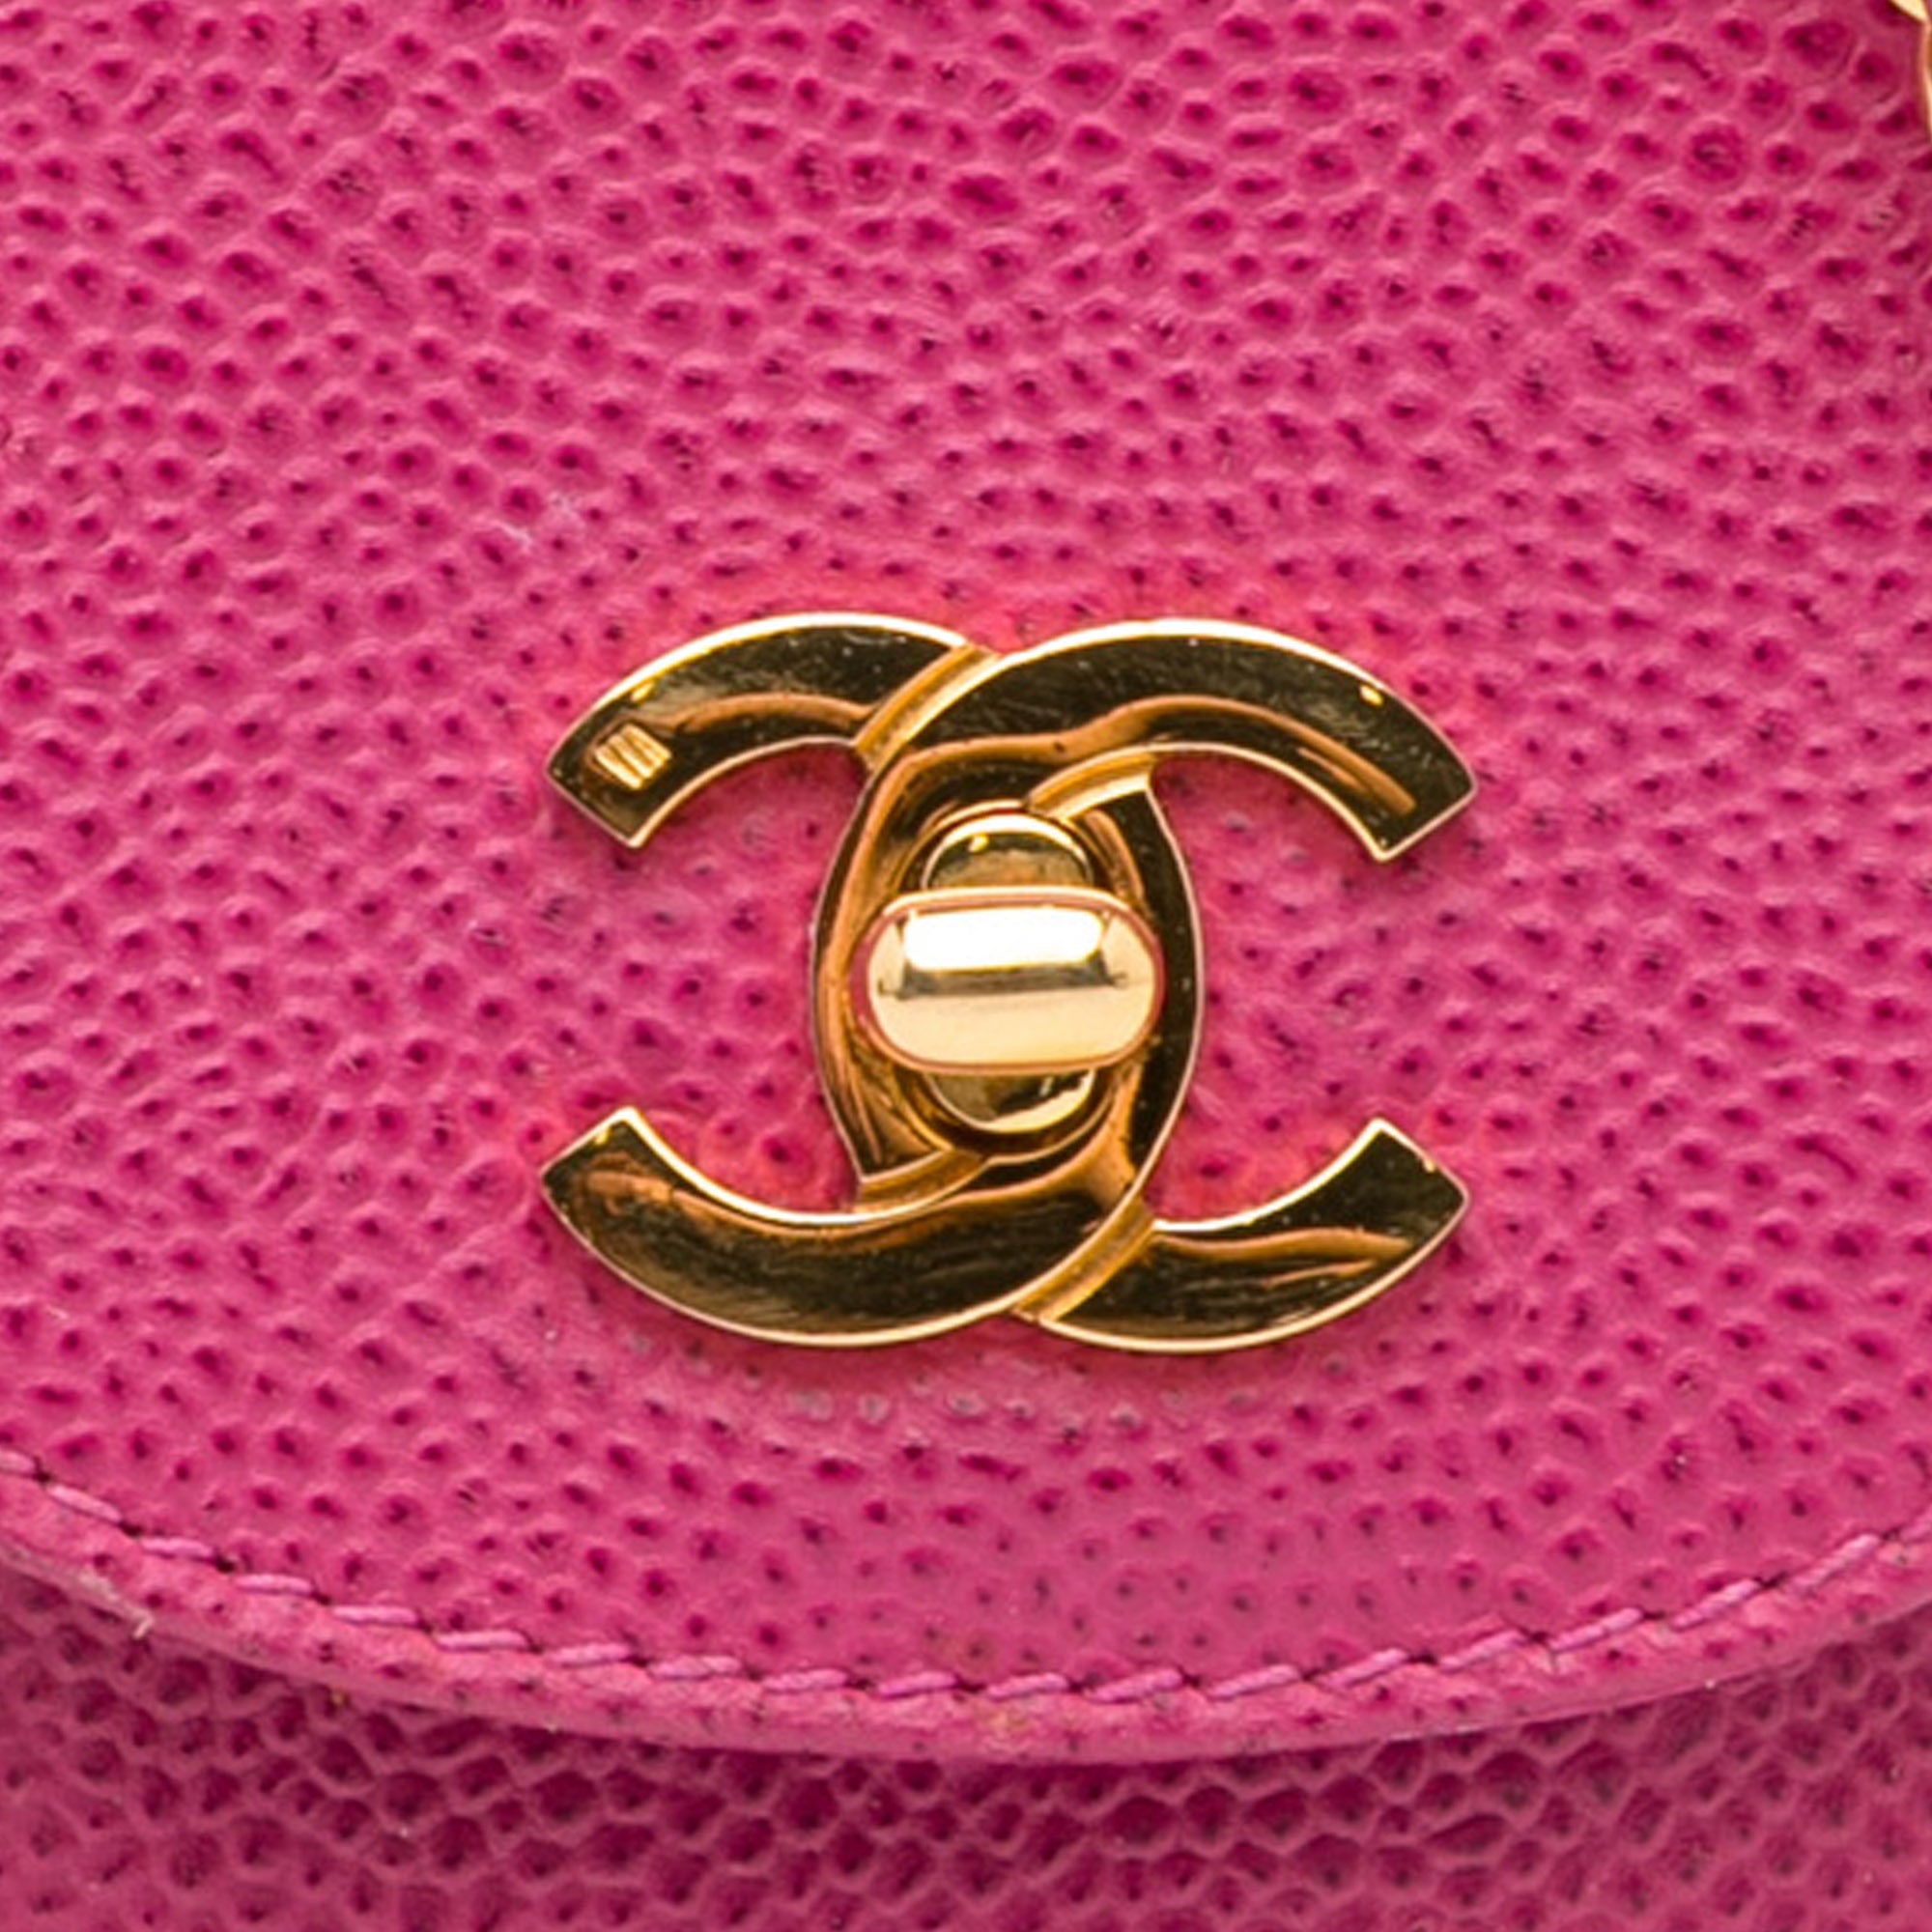 Pink Chanel CC Caviar Phone Crossbody Bag – Designer Revival